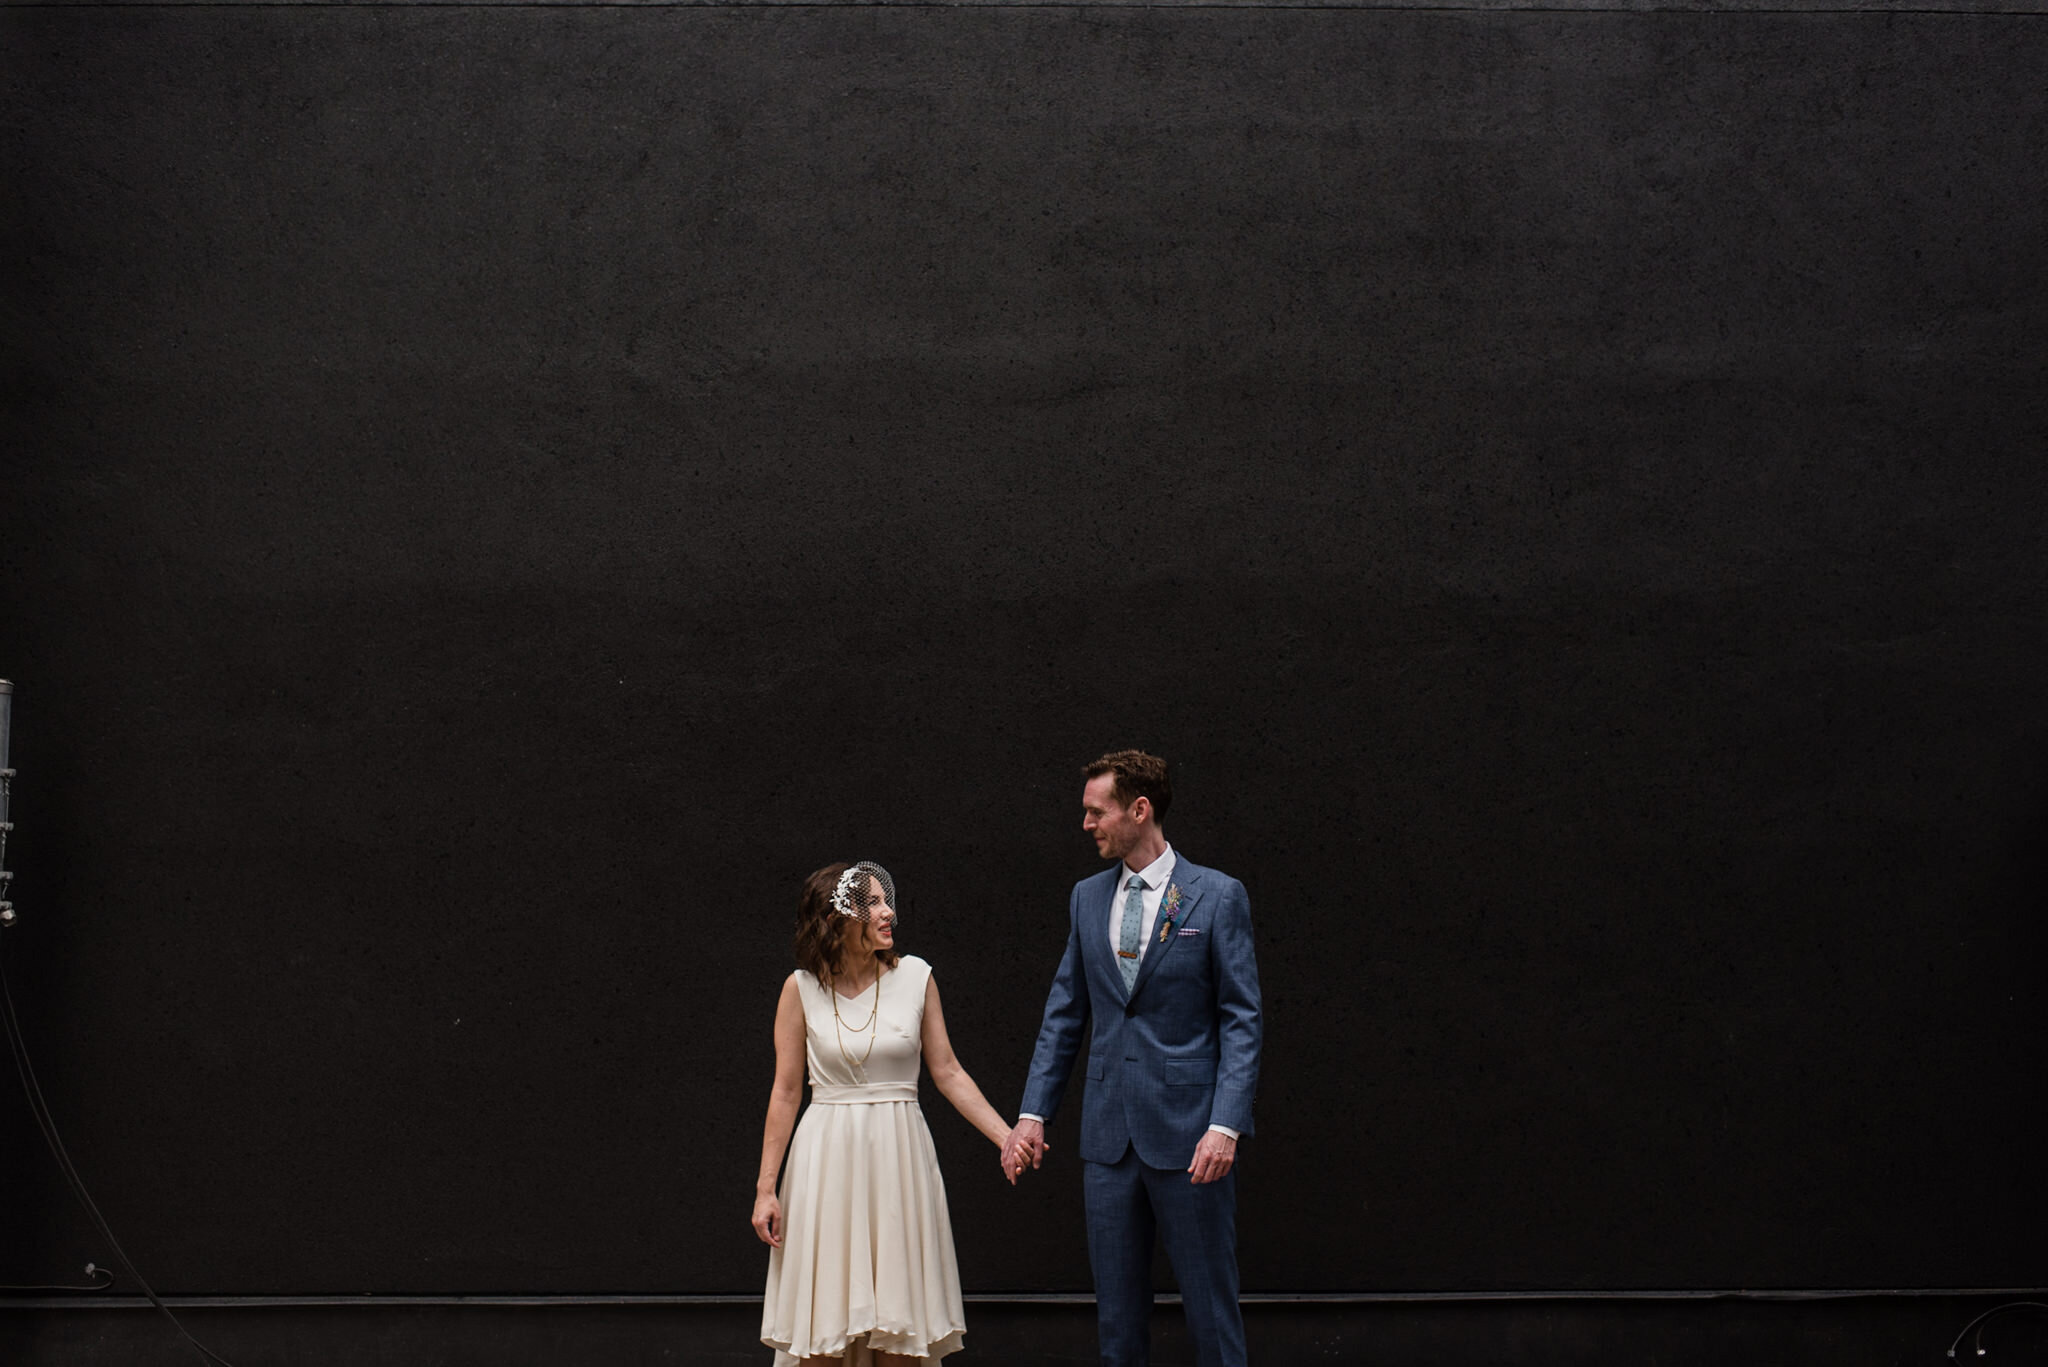 841-toronto-wedding-photos-couples-berkeley-events-fieldhouse-church-minimalistic-black-wall.jpg